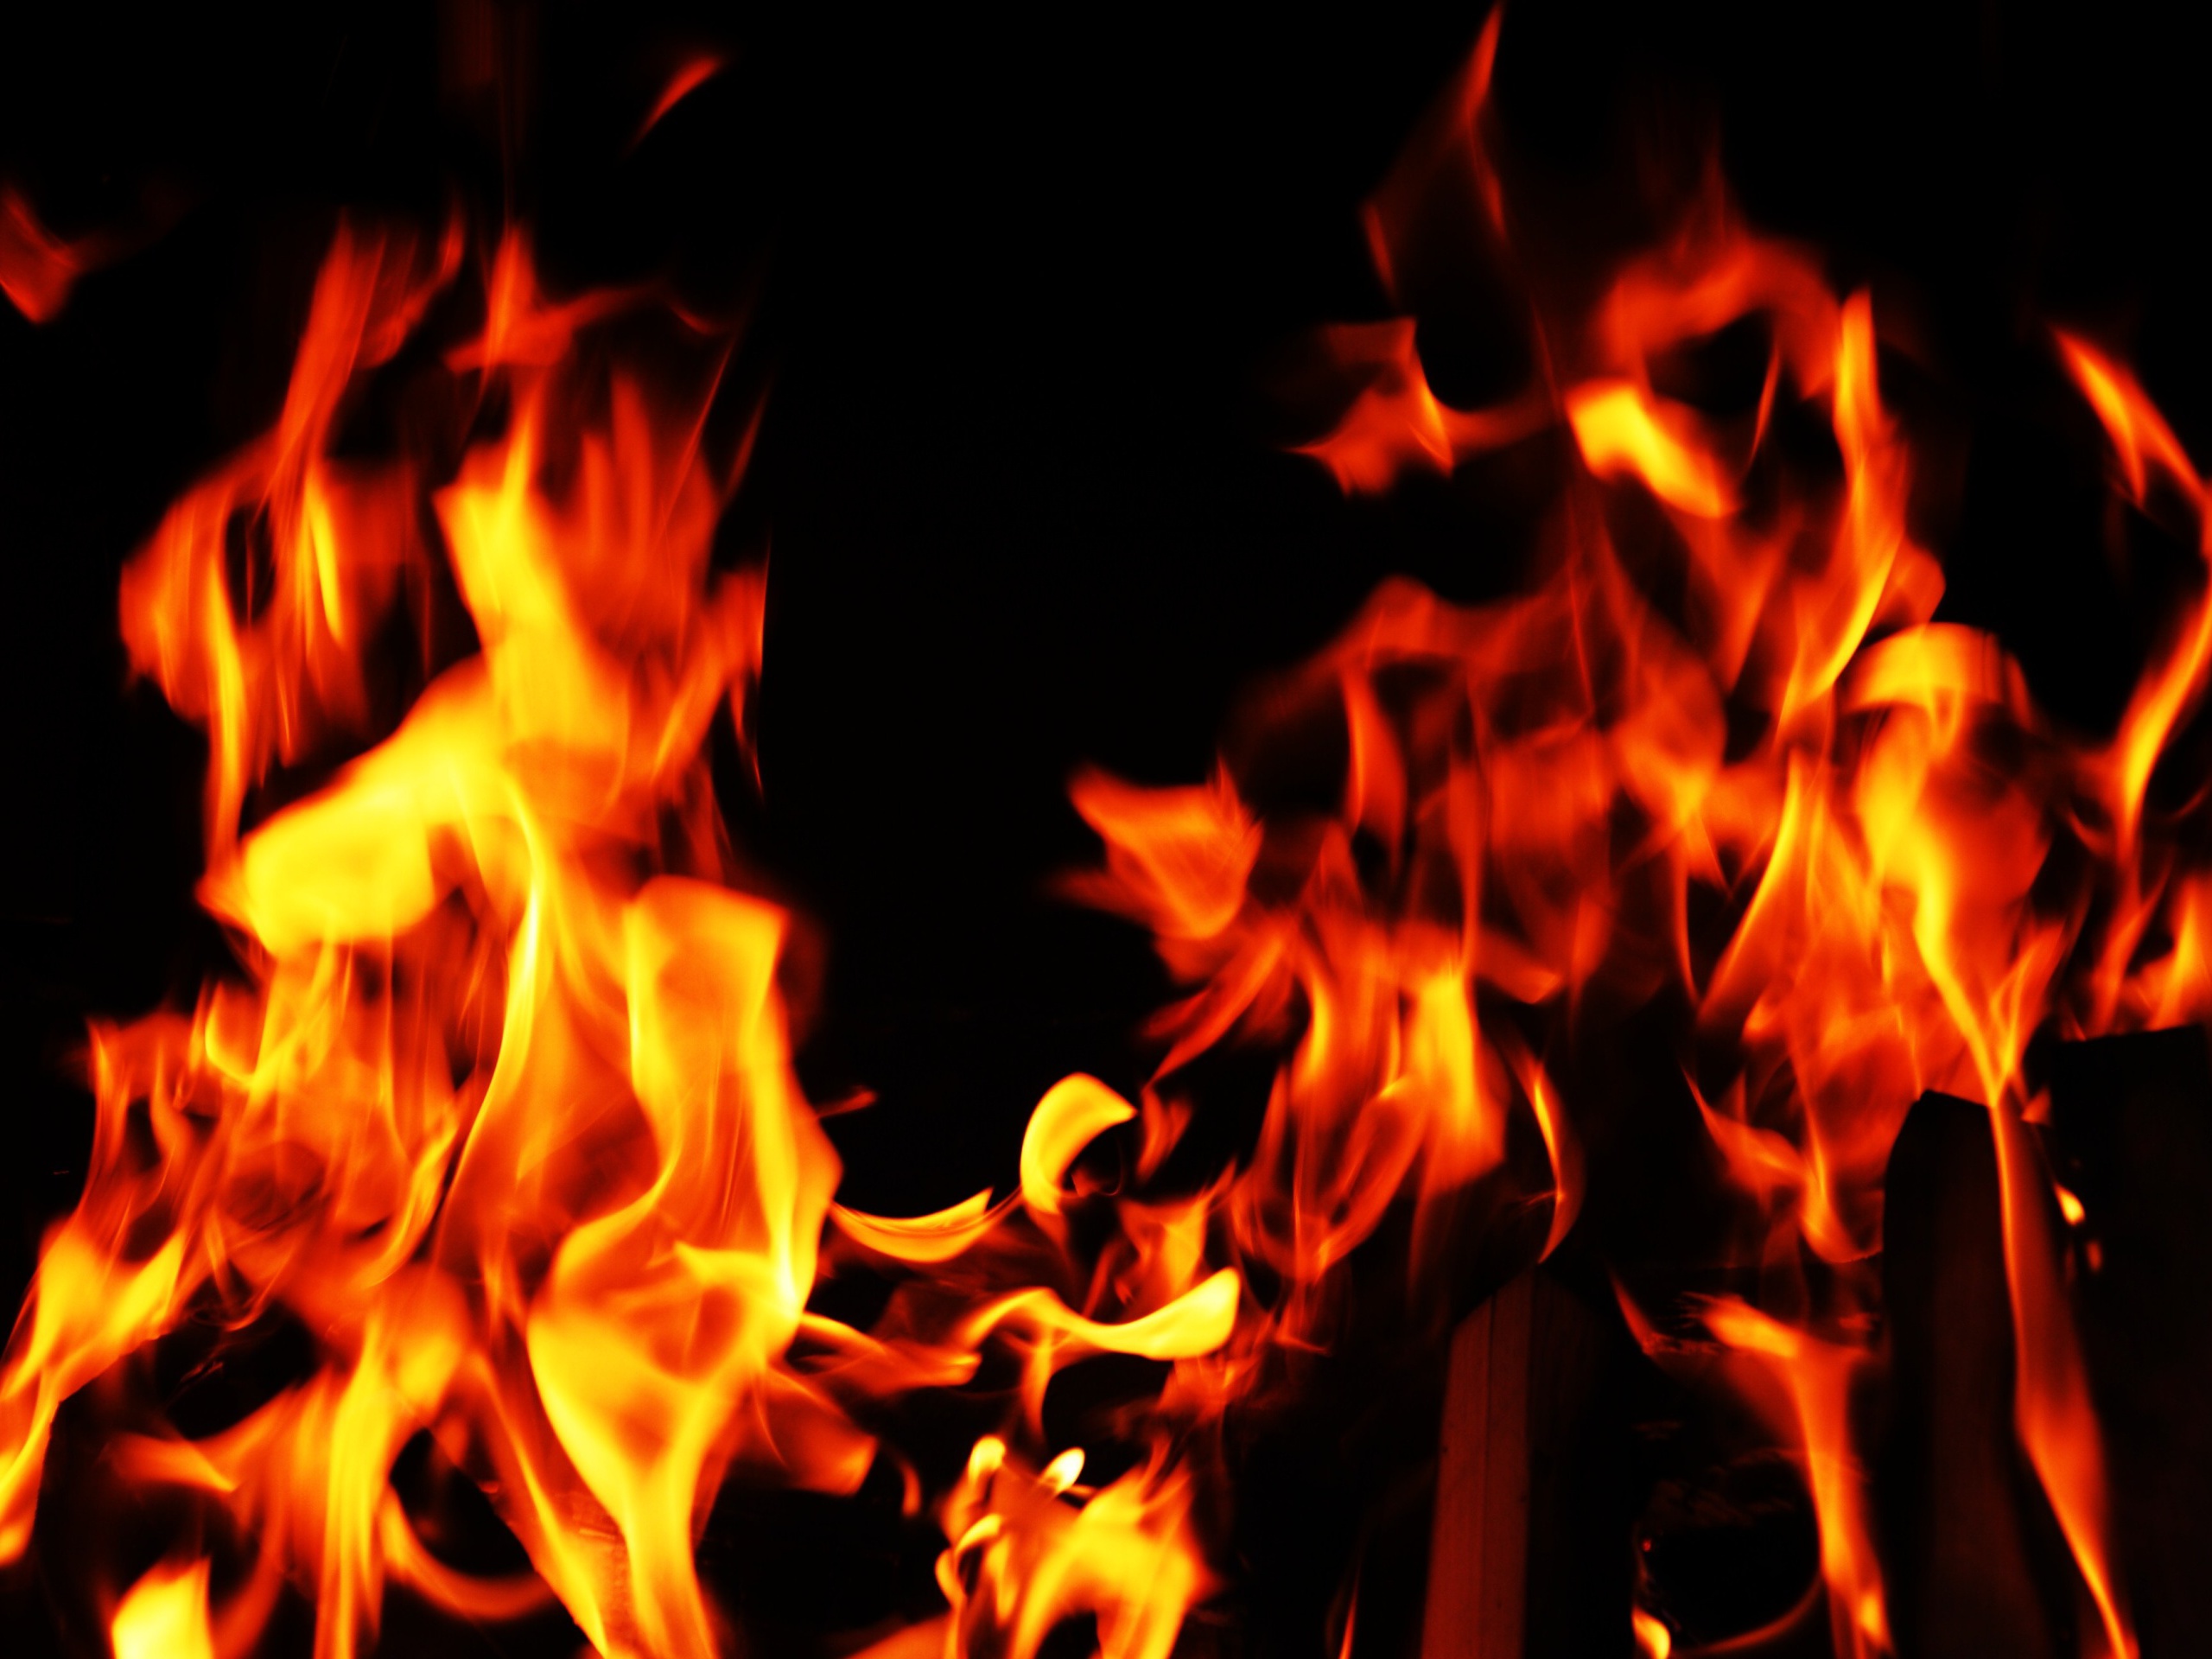 Free Download 2560x1920 Fire Desktop Pc And Mac Wallpaper 2560x1920 For Your Desktop Mobile Tablet Explore 46 Wallpaper Of Fire Free Fire Wallpaper Fire Background Wallpaper Fire Department Wallpapers